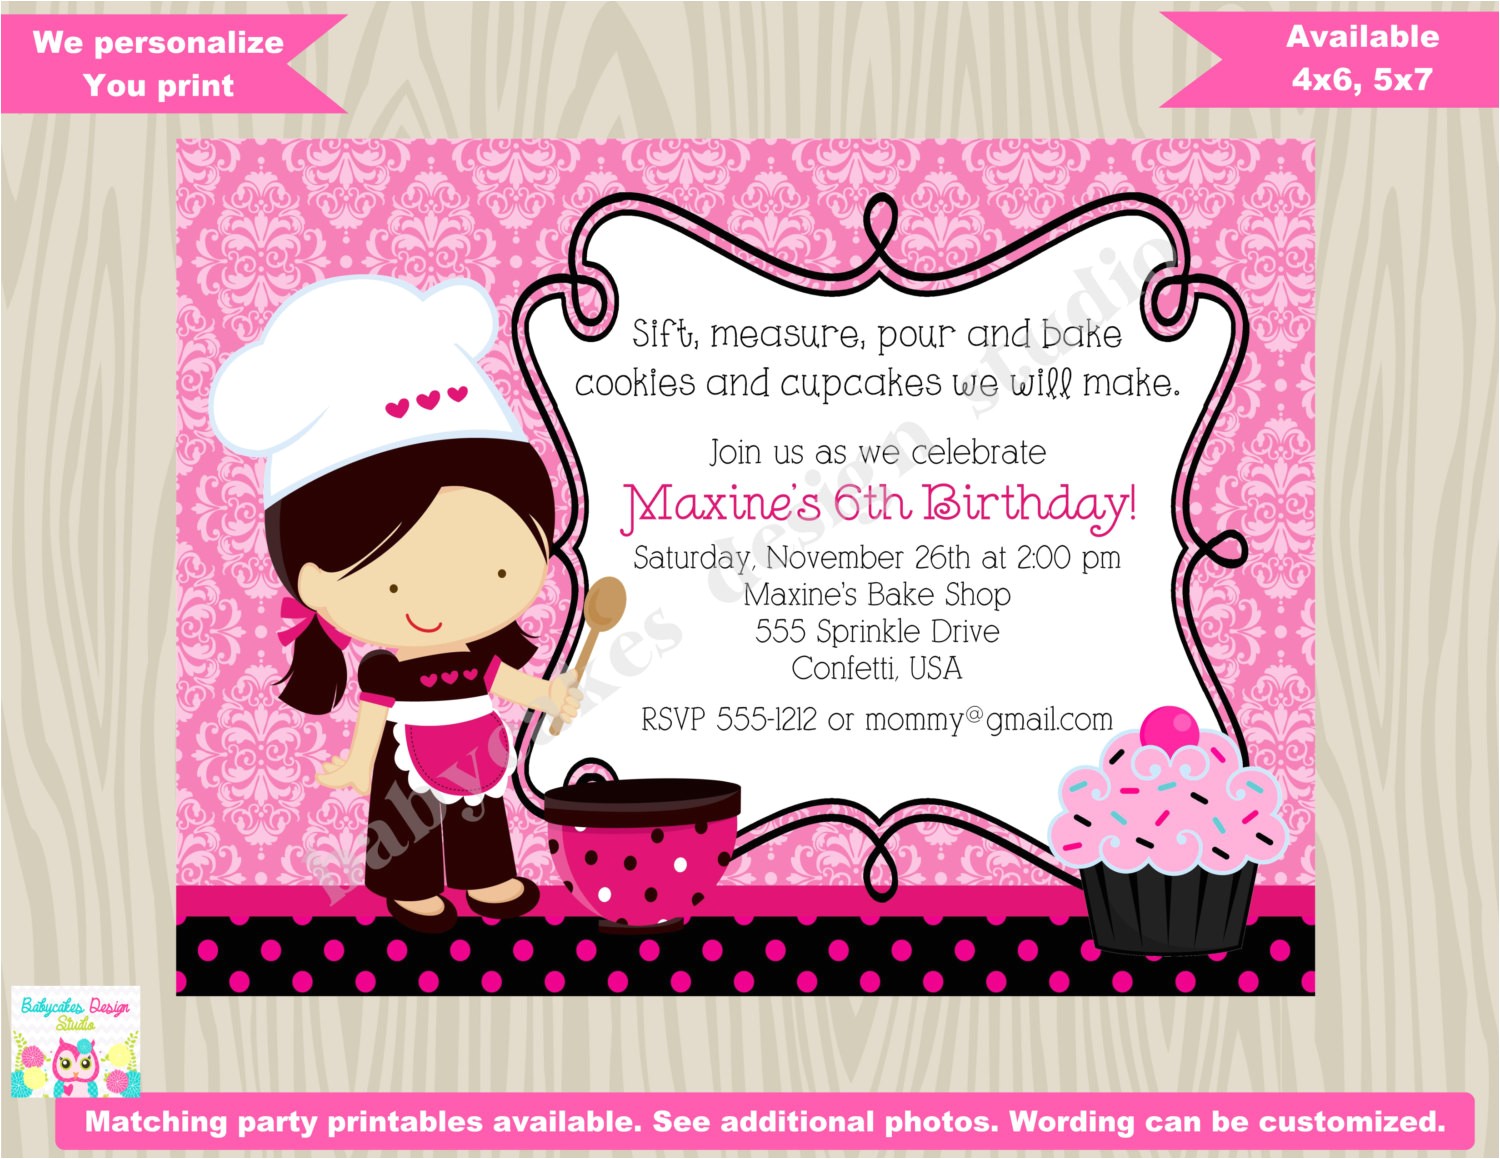 Cupcake Decorating Birthday Party Invitations Cupcake Decorating Party Birthday Invitation Invite Cupcake